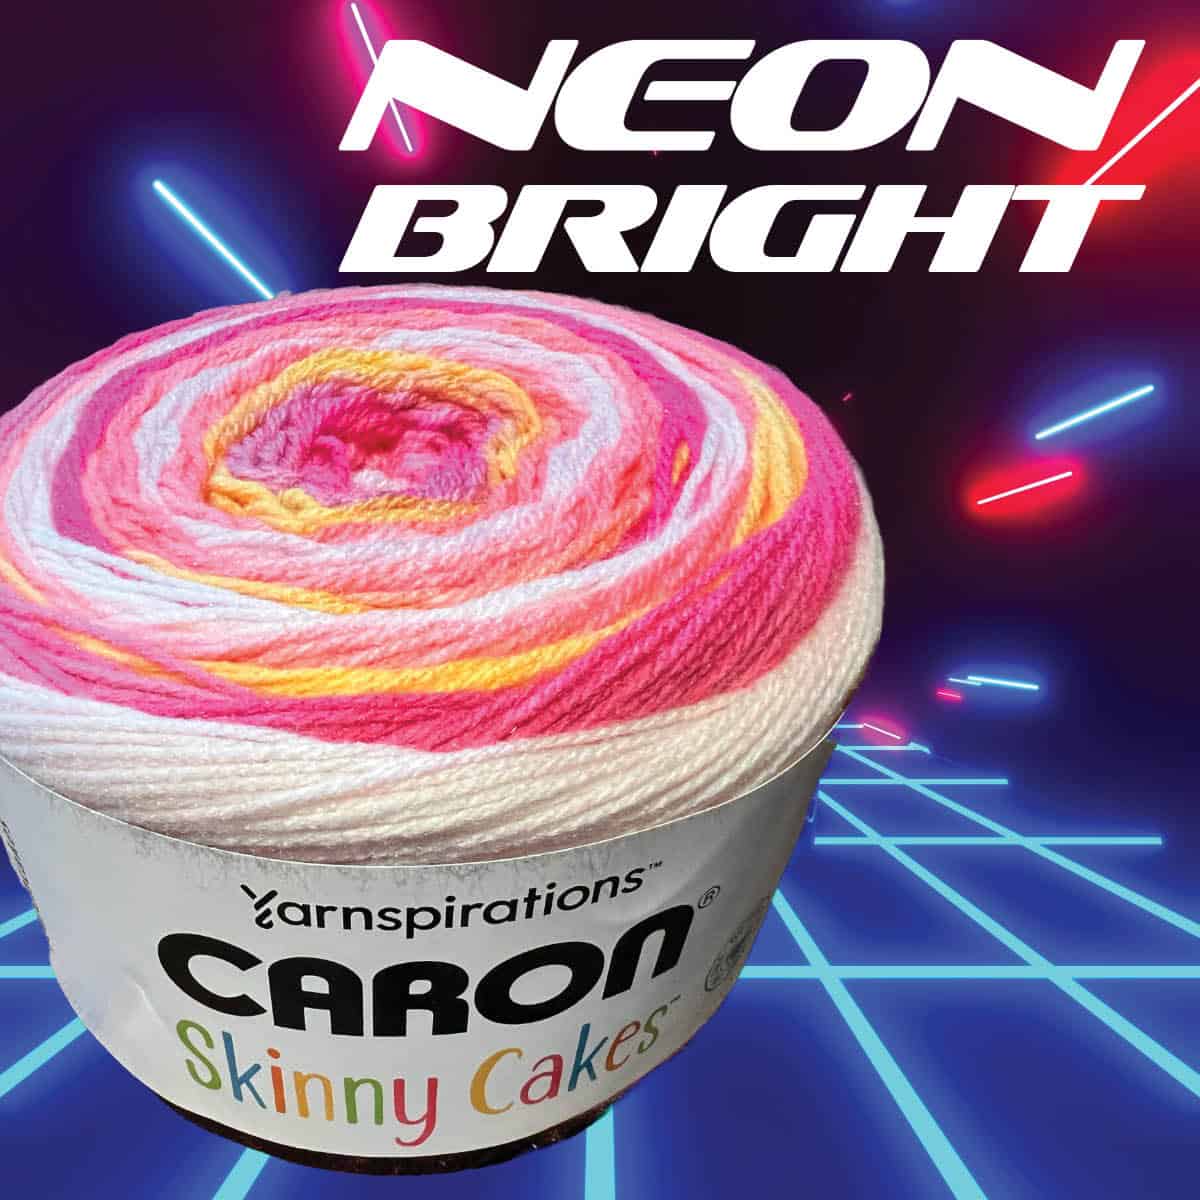 Neon Bright Caron Skinny Cakes Yarn Product